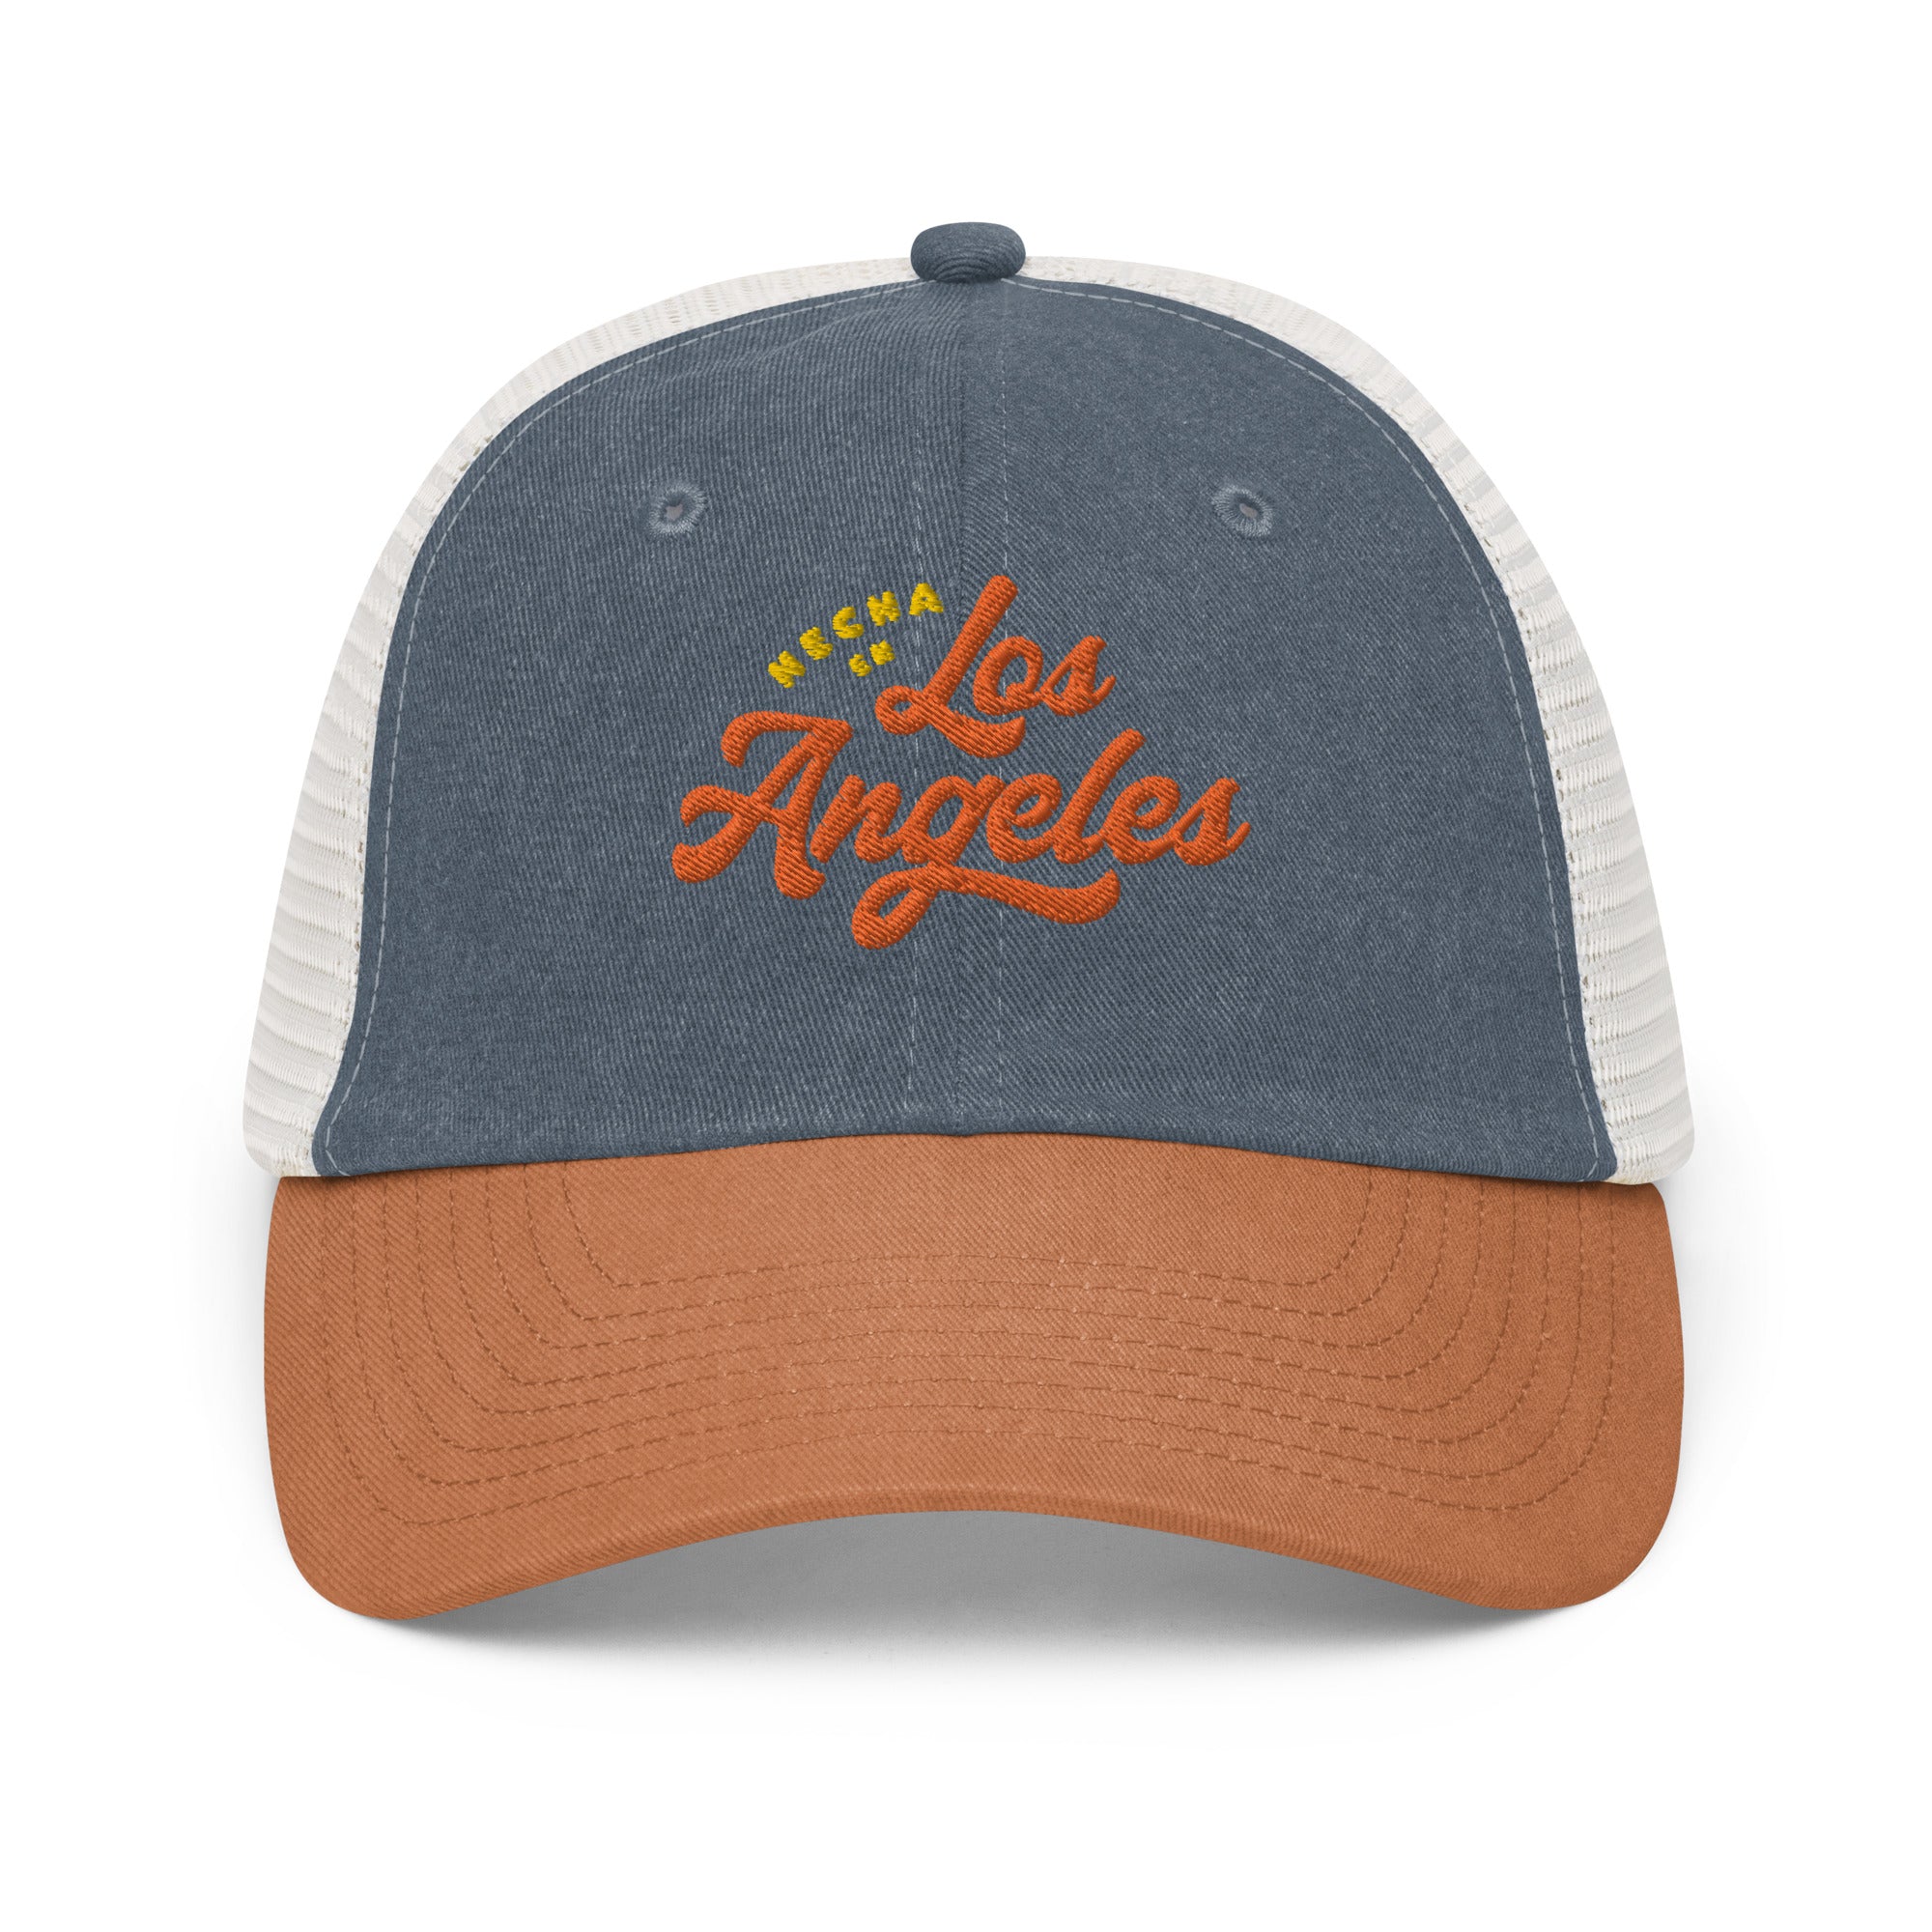 Hecha En Los Angeles Pigment-dyed cap